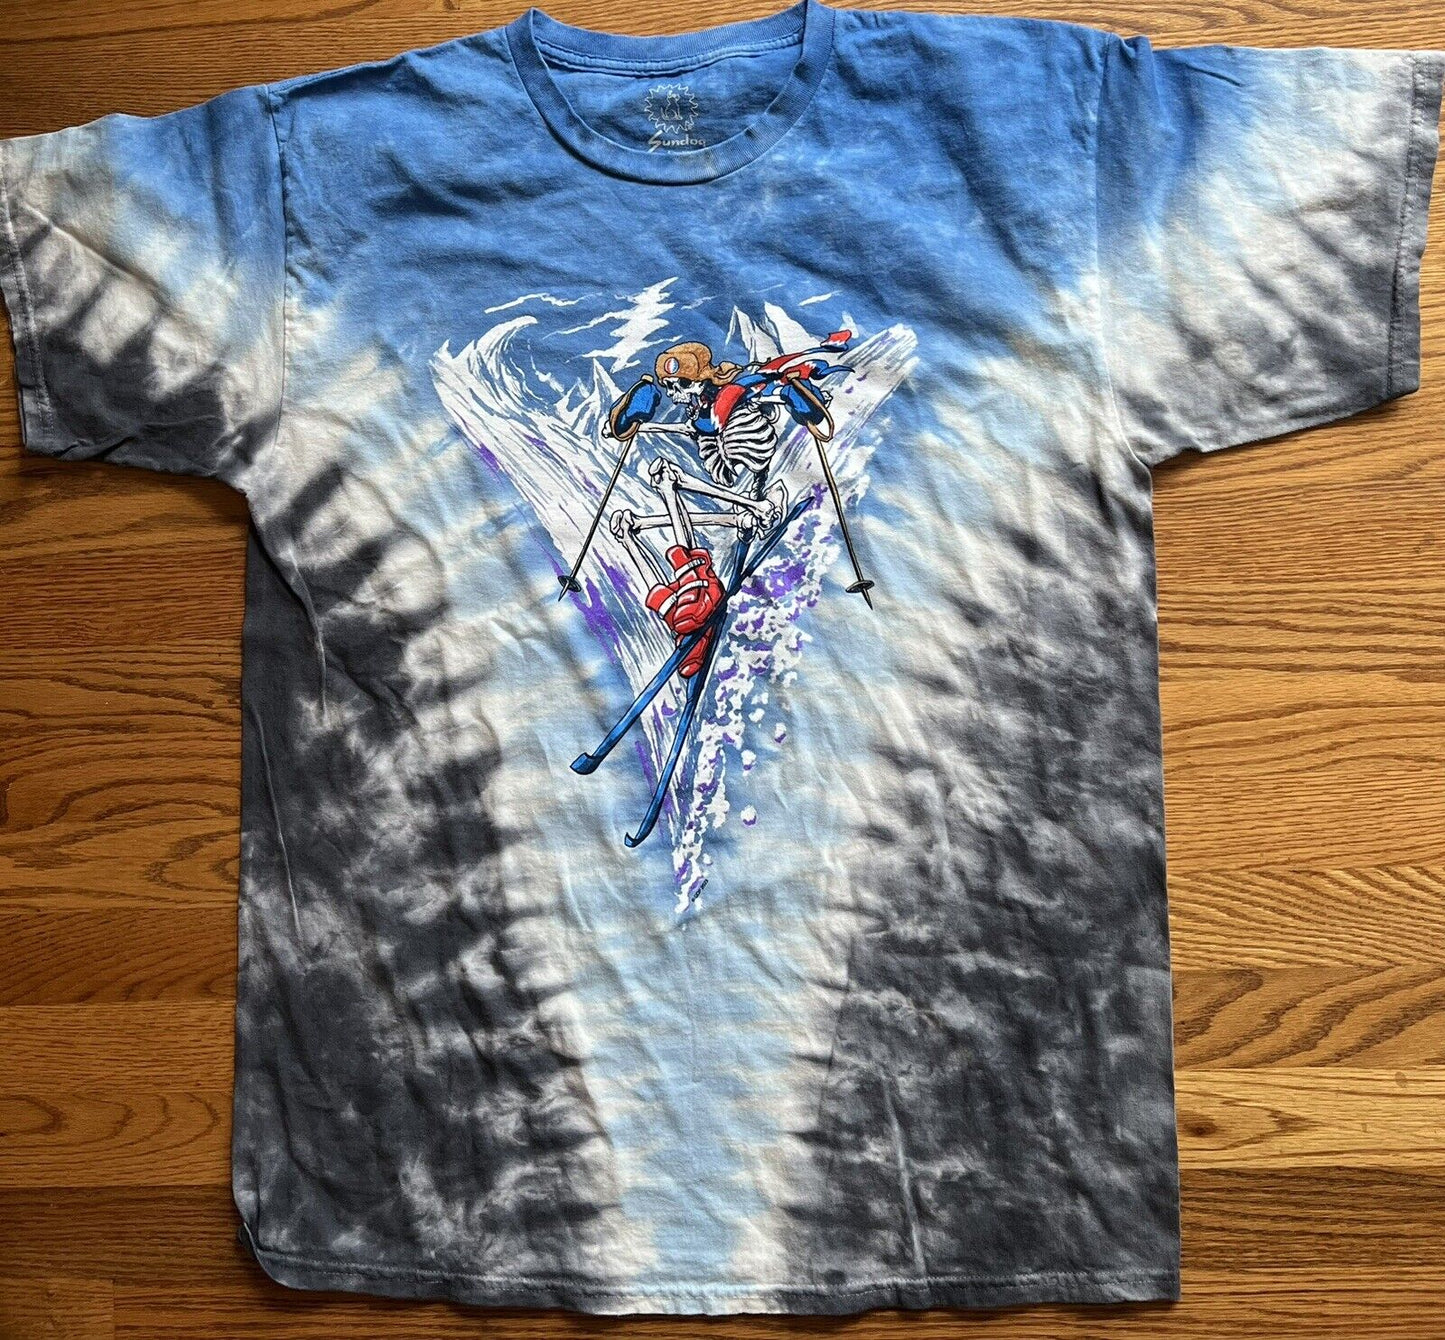 New Grateful Dead Fresh Powder skiing shirt - Grateful Dead tie dye skiing shirt -Grateful Dead Down Hill Skier shirt - Bertha Skiing shirt - Grateful Dead skiing shirt -  Dead & Company shirt - sizes: small, medium, large, XL, 2XL, 3XL and 4XL